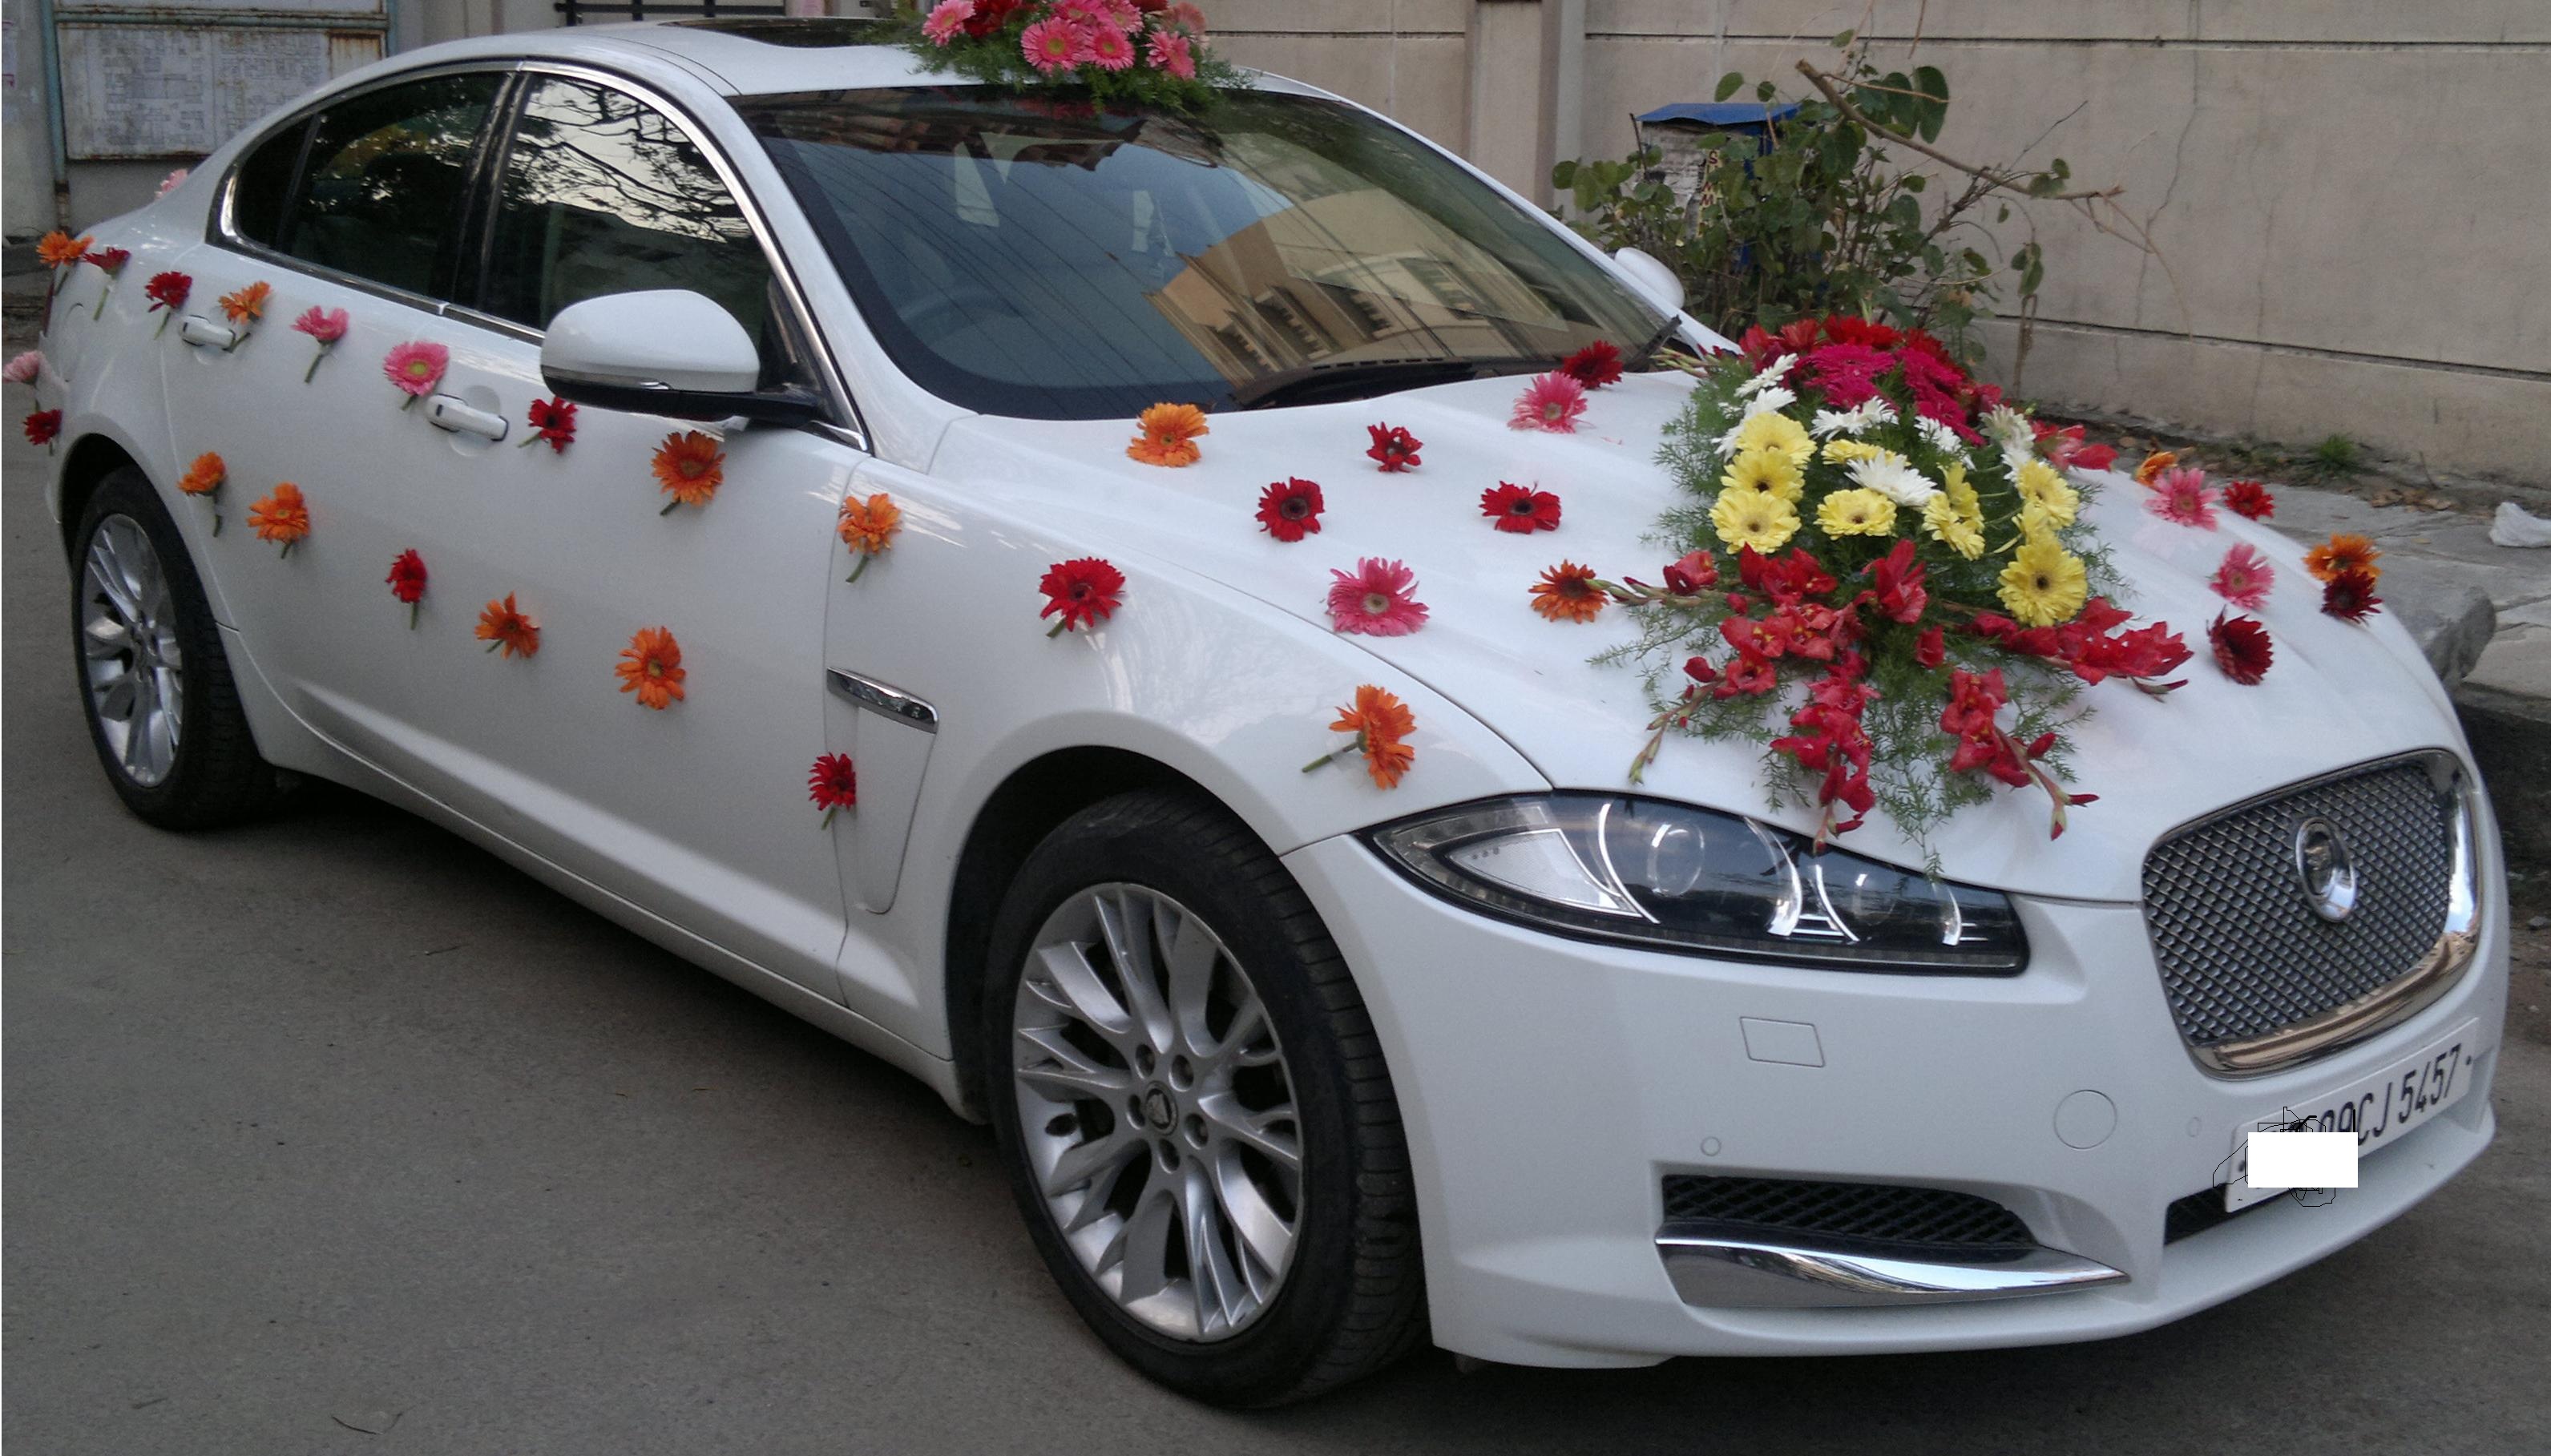 Wedding Car Decoration Ideas to Have Beautiful Marriage Car Decoration